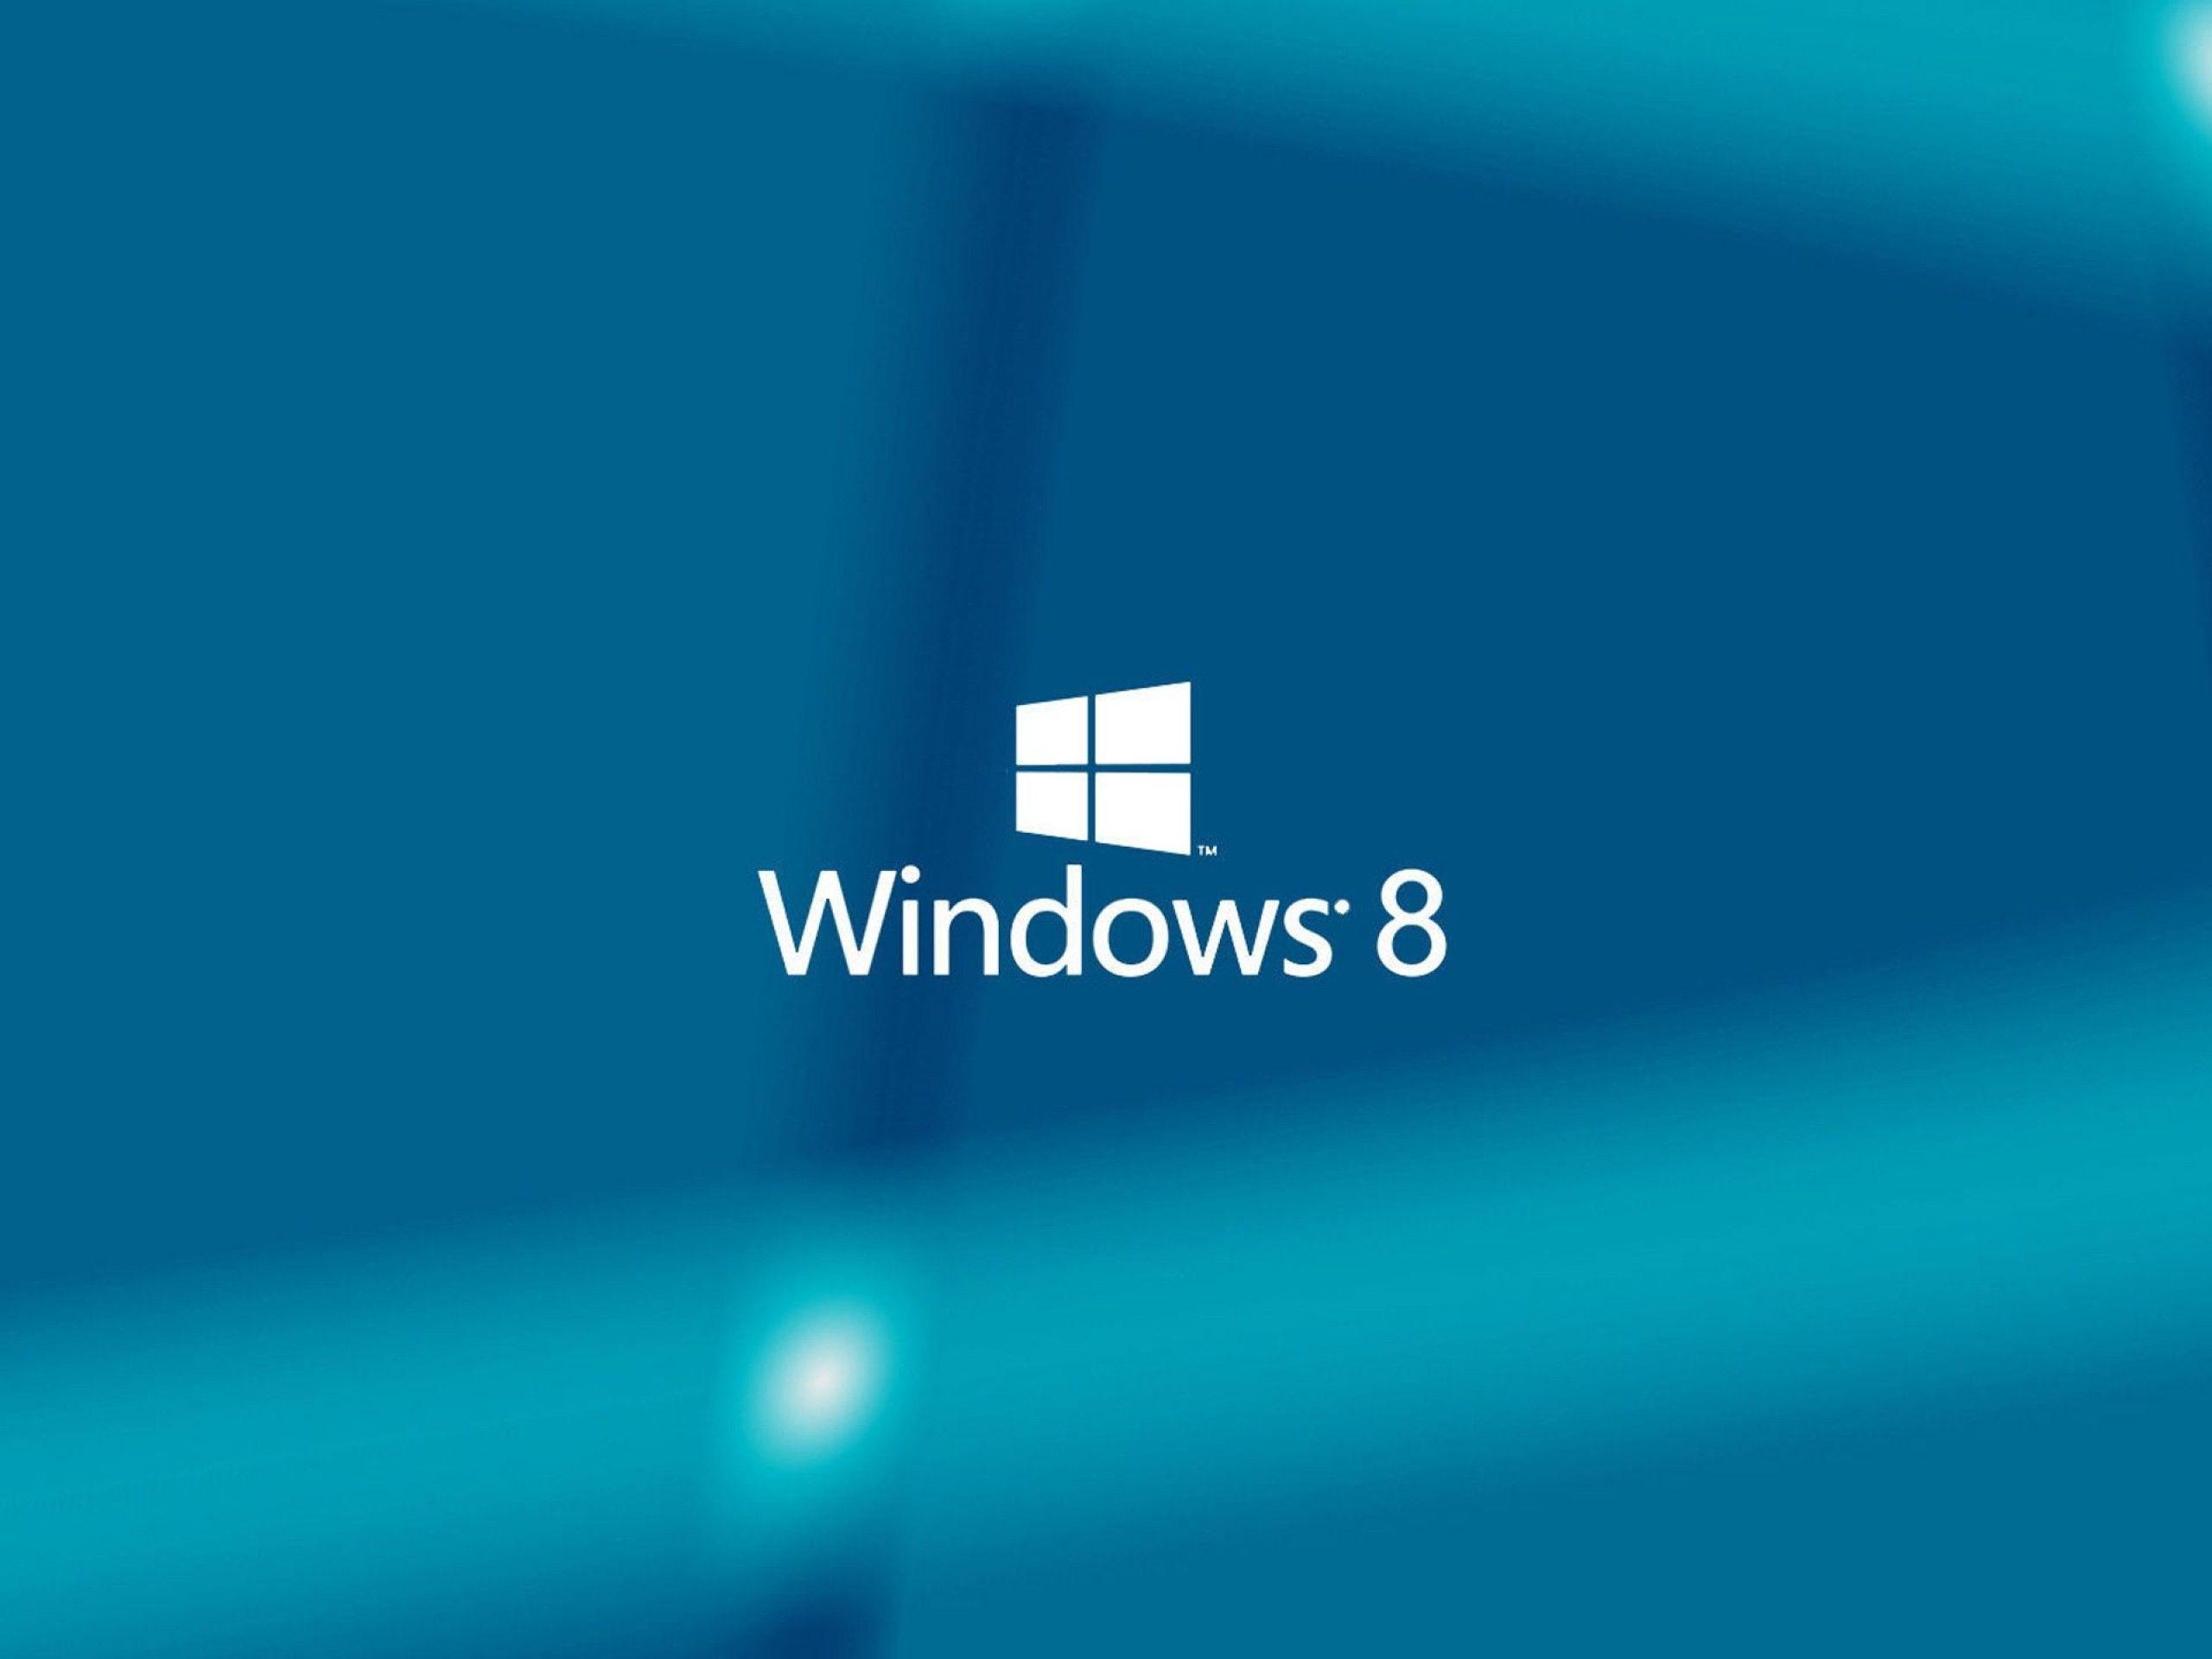 Official Windows 8 Wallpaper 98 183902 Image HD Wallpaper